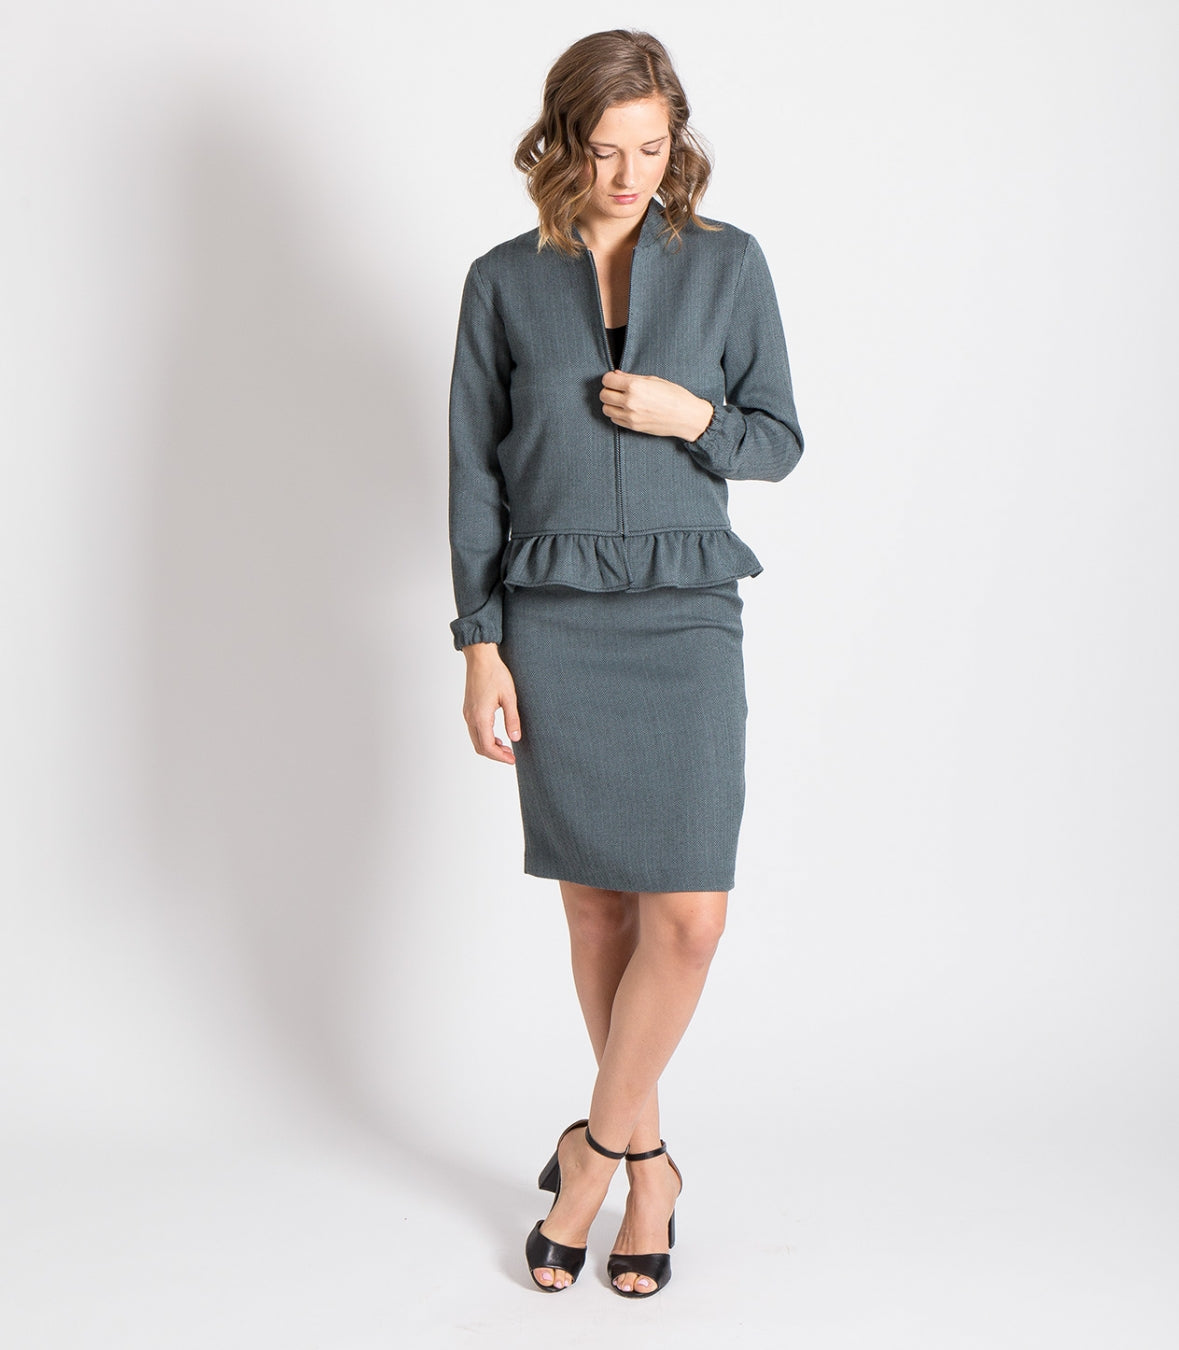 Wool Pencil Skirt Made in USA | RAMBLERS WAY